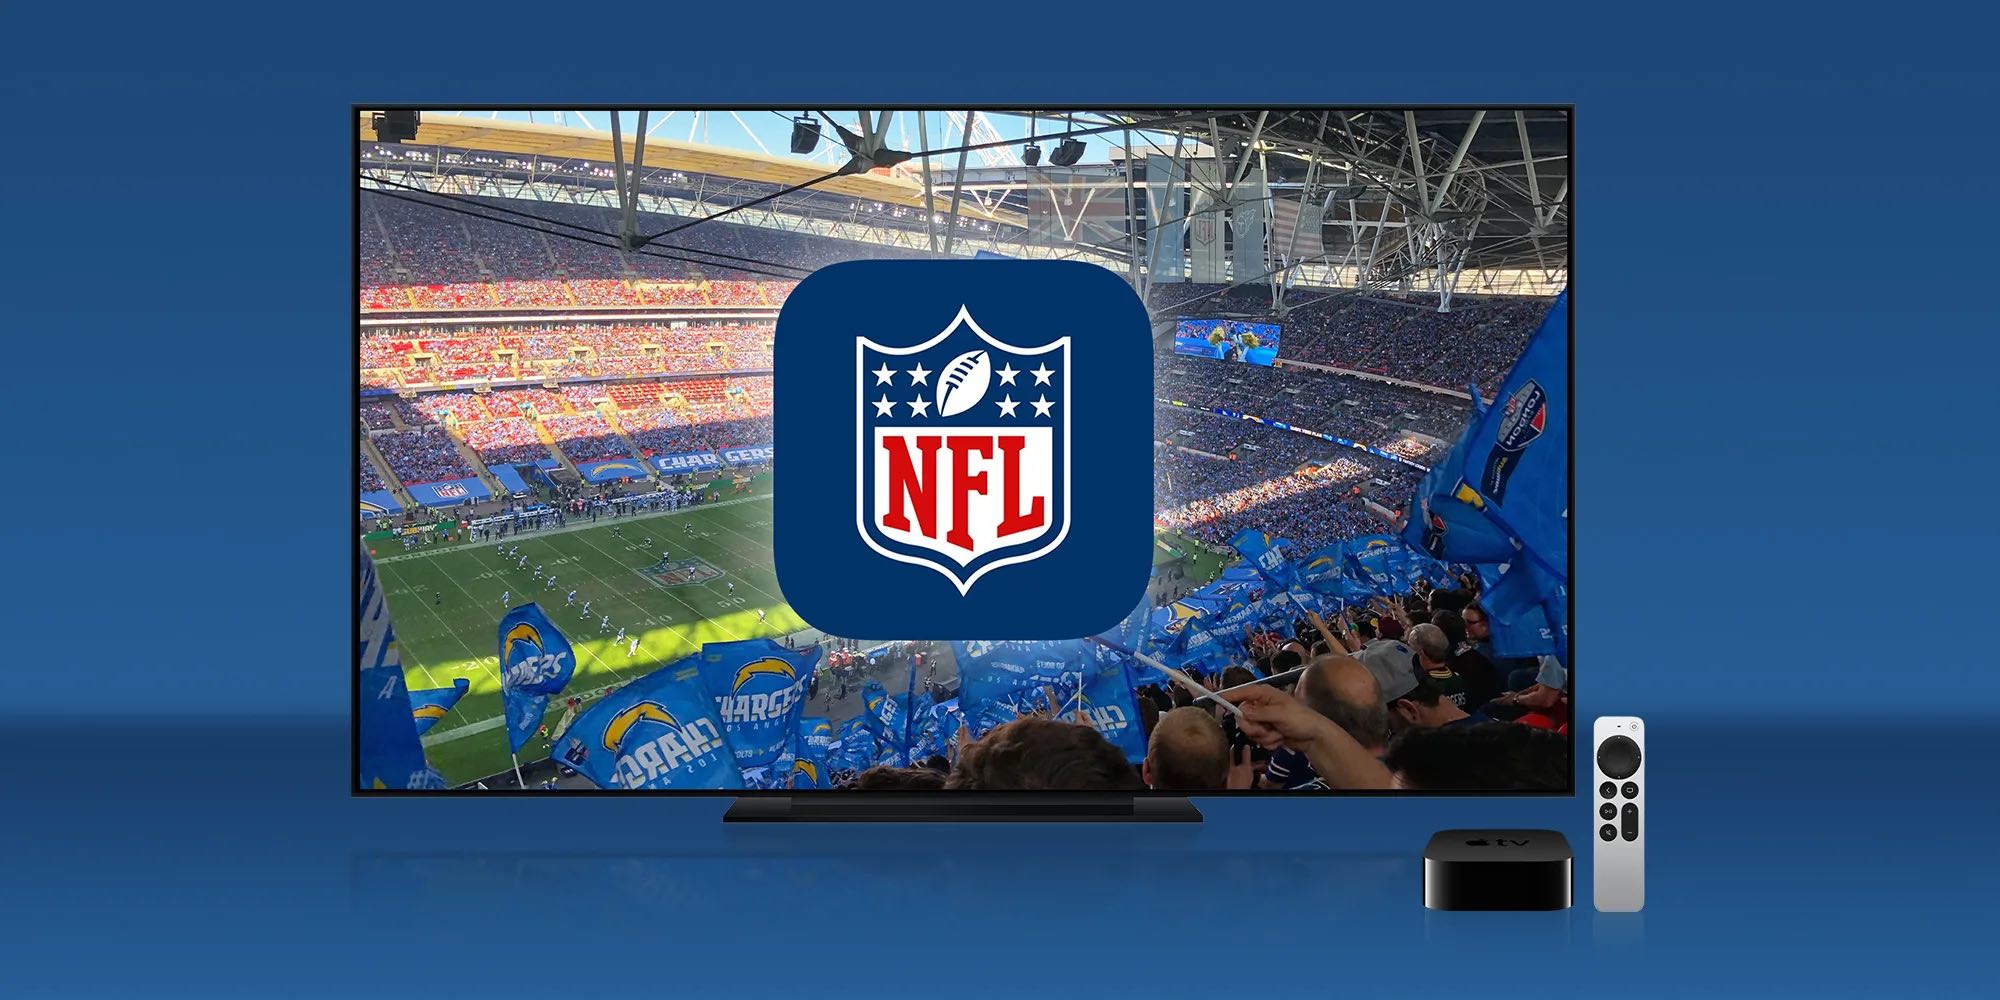 NFL, Google Announce 'NFL Sunday Ticket' Agreement